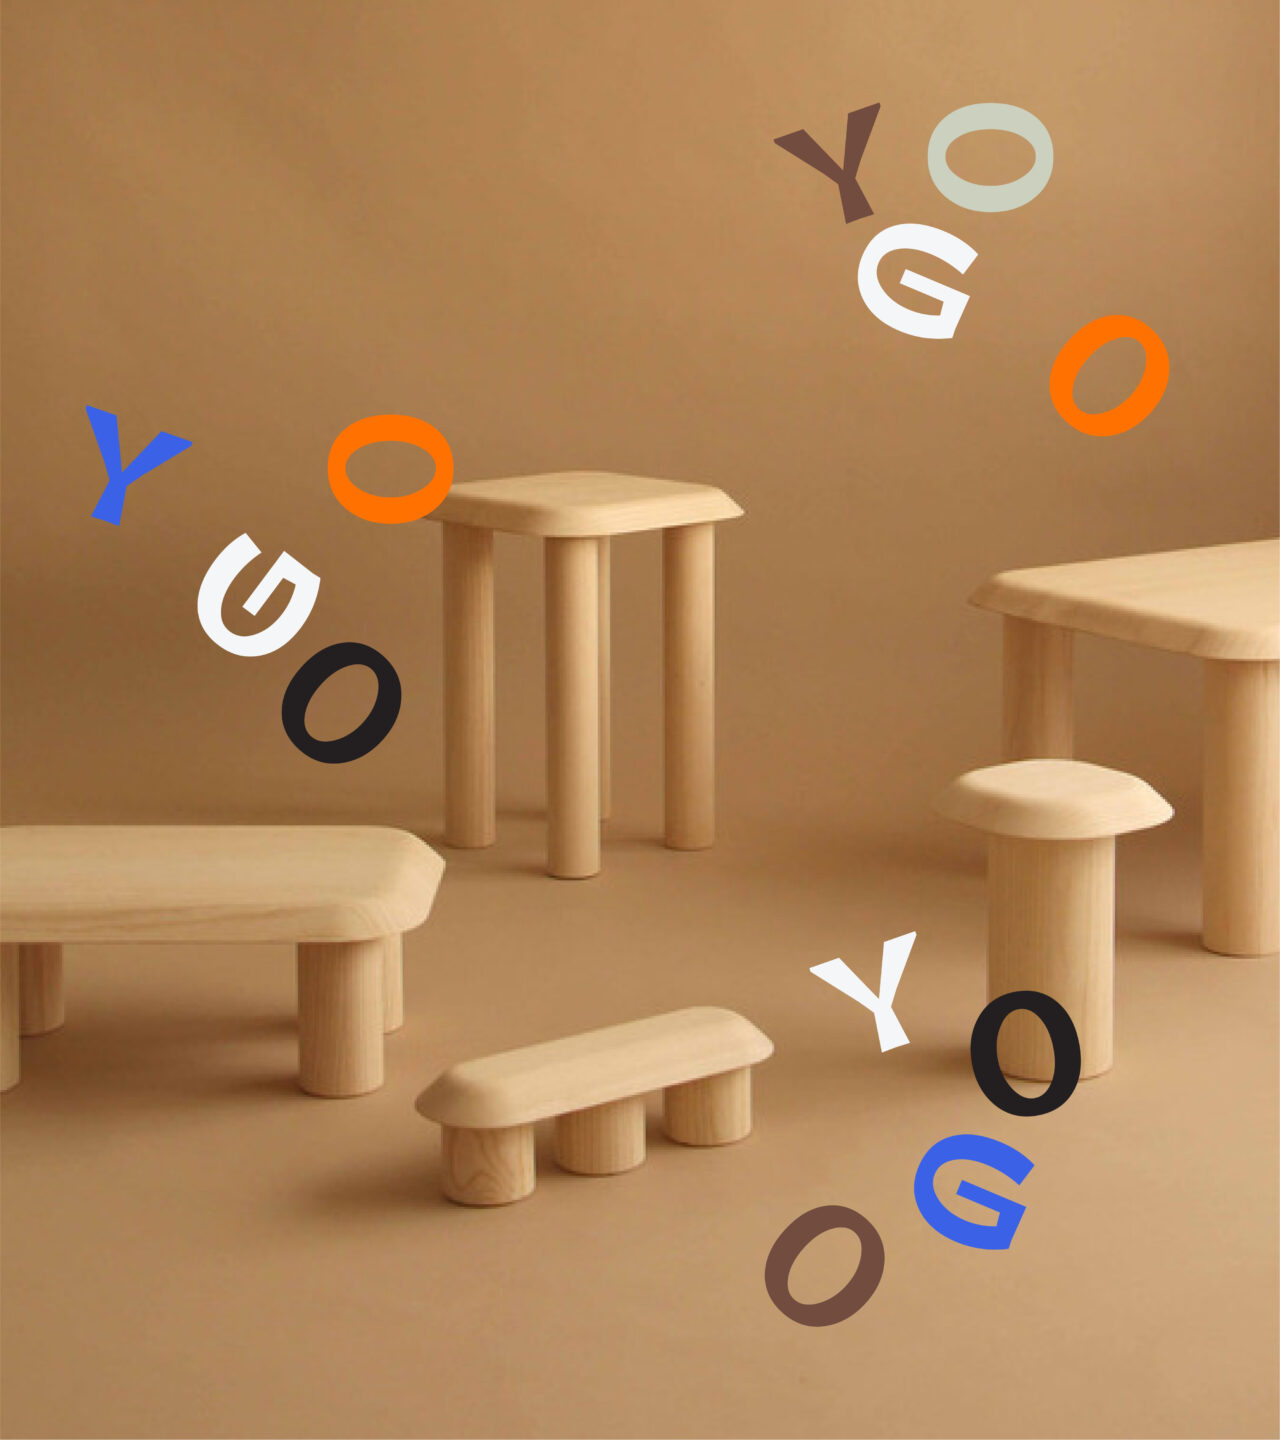 Yoyo-logo-1